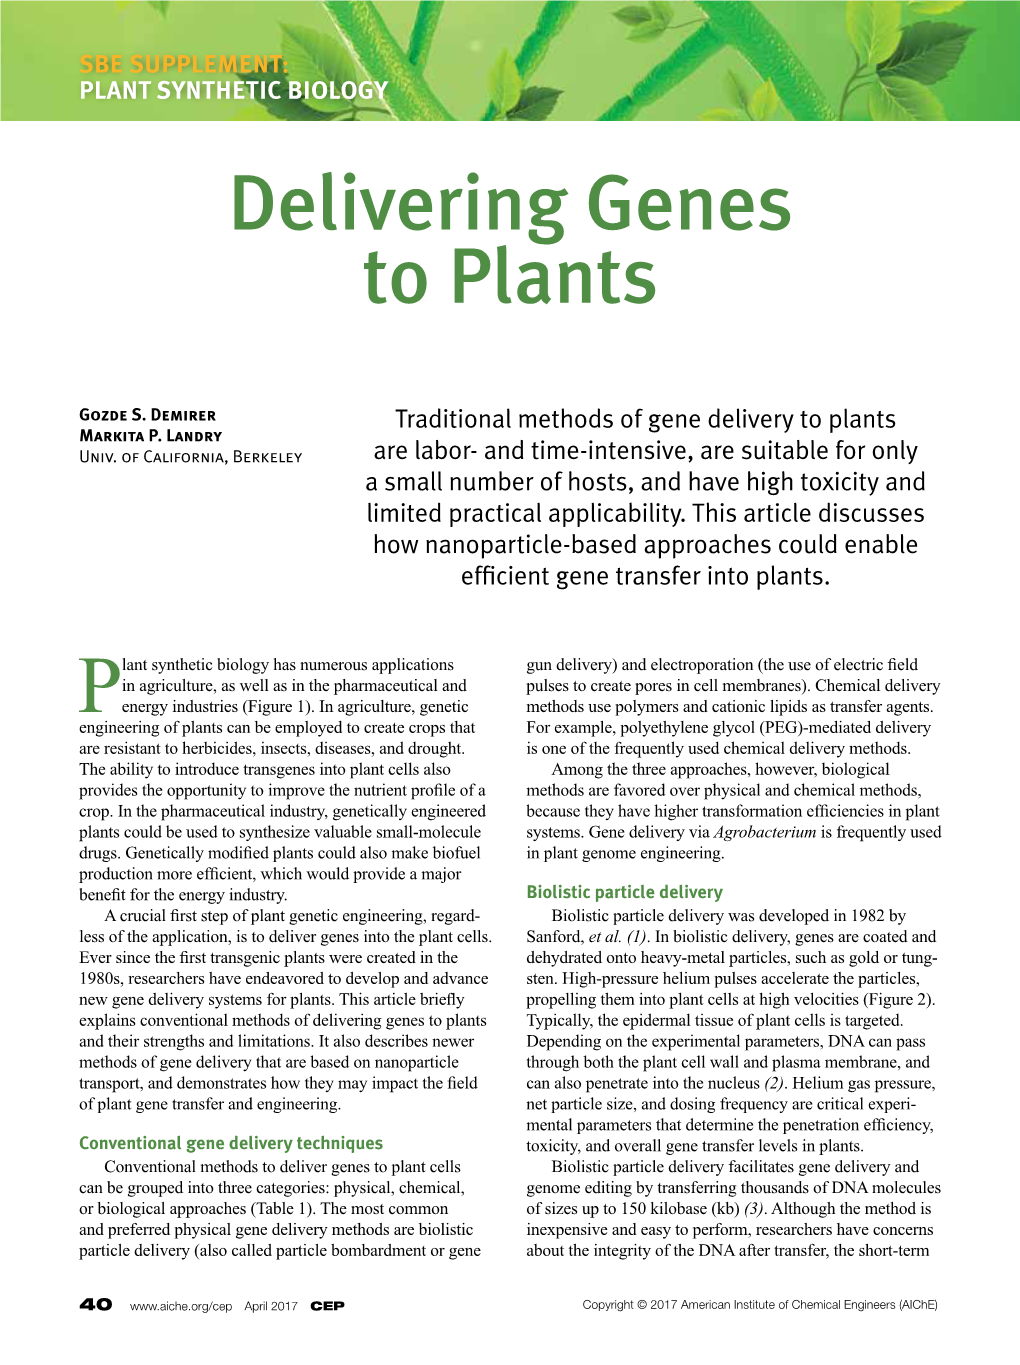 Delivering Genes to Plants